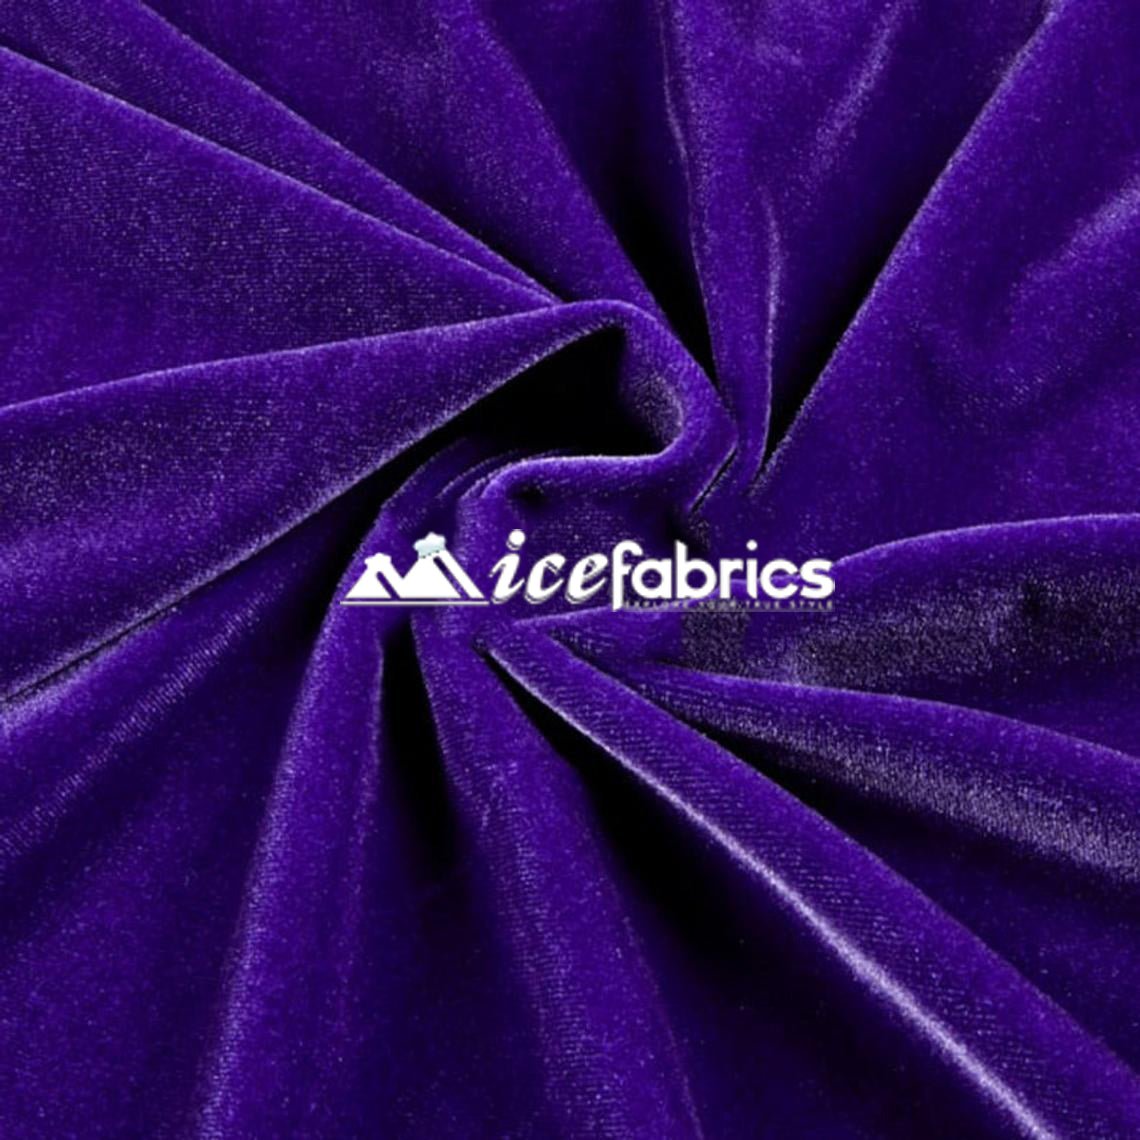 Purple Velvet Fabric By The Yard | 4 Way StretchVelvet FabricICE FABRICSICE FABRICSBy The Yard (58" Wide)Purple Velvet Fabric By The Yard | 4 Way Stretch ICE FABRICS